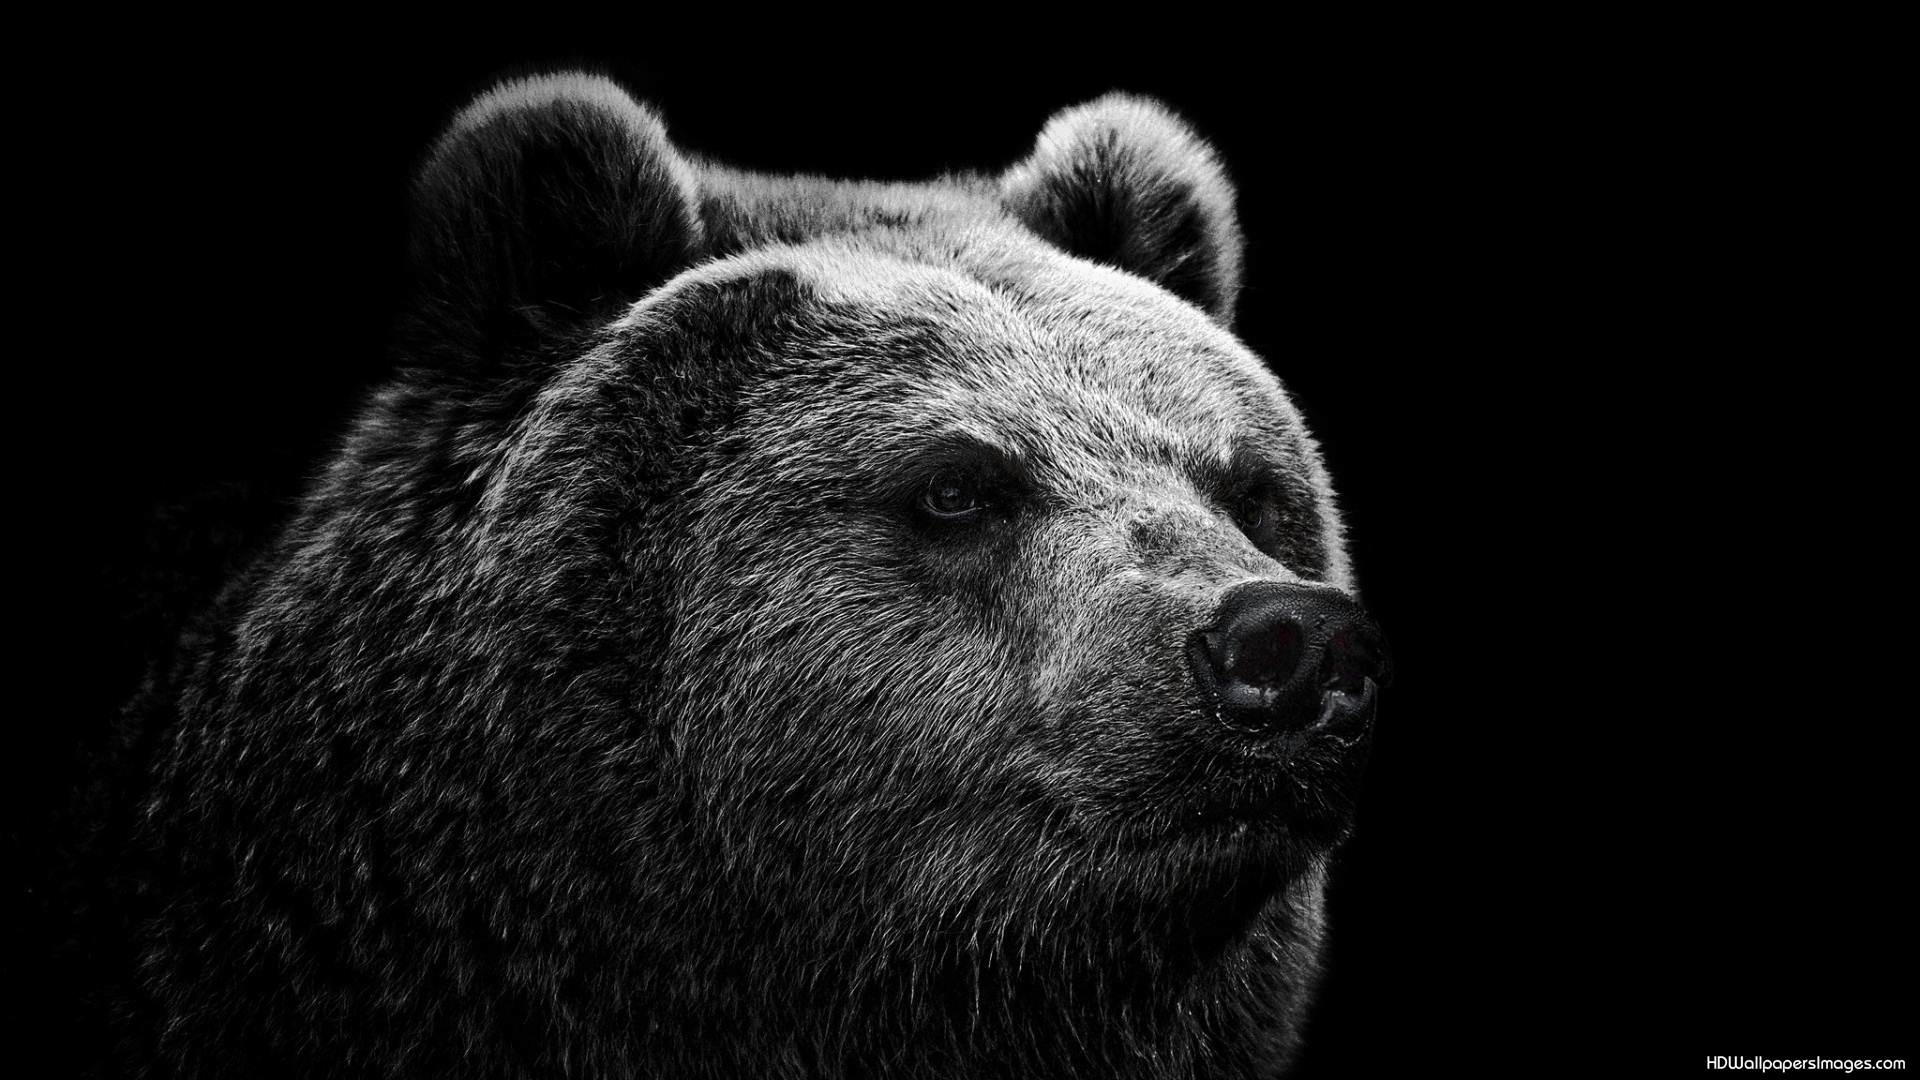 Black bear wallpaper pictures